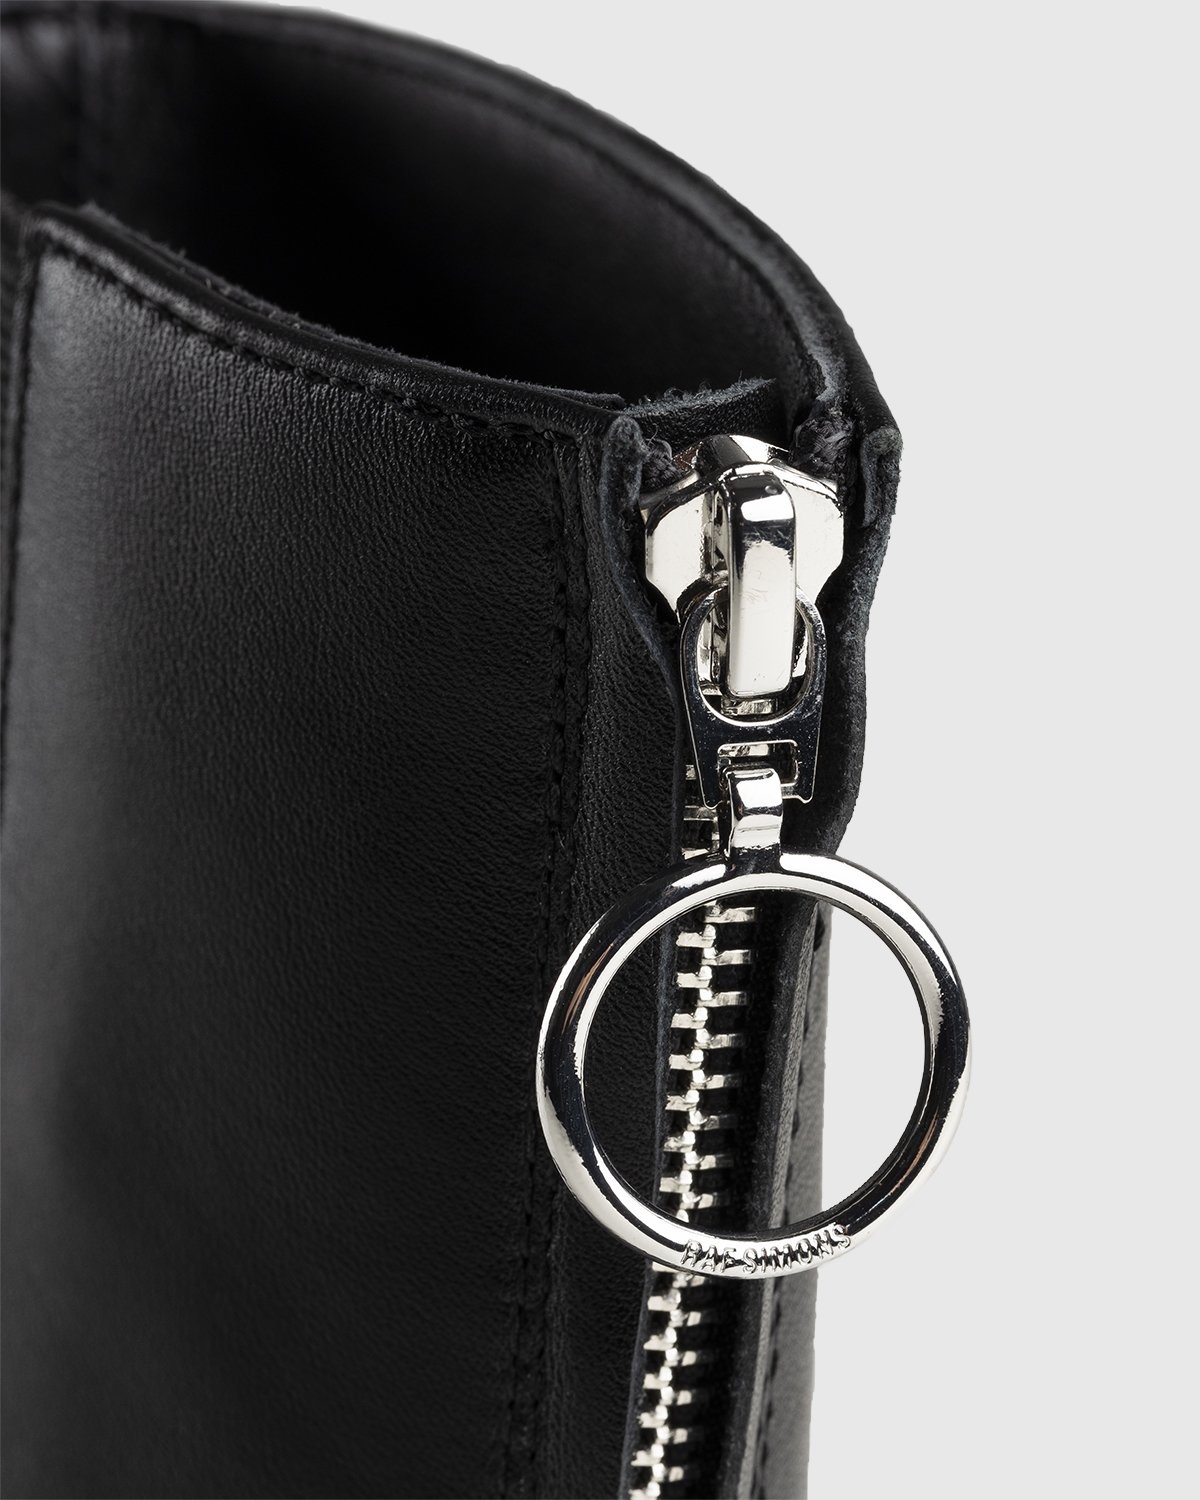 Jil Sander – Chelsea Boots Black - Shoes - Black - Image 6